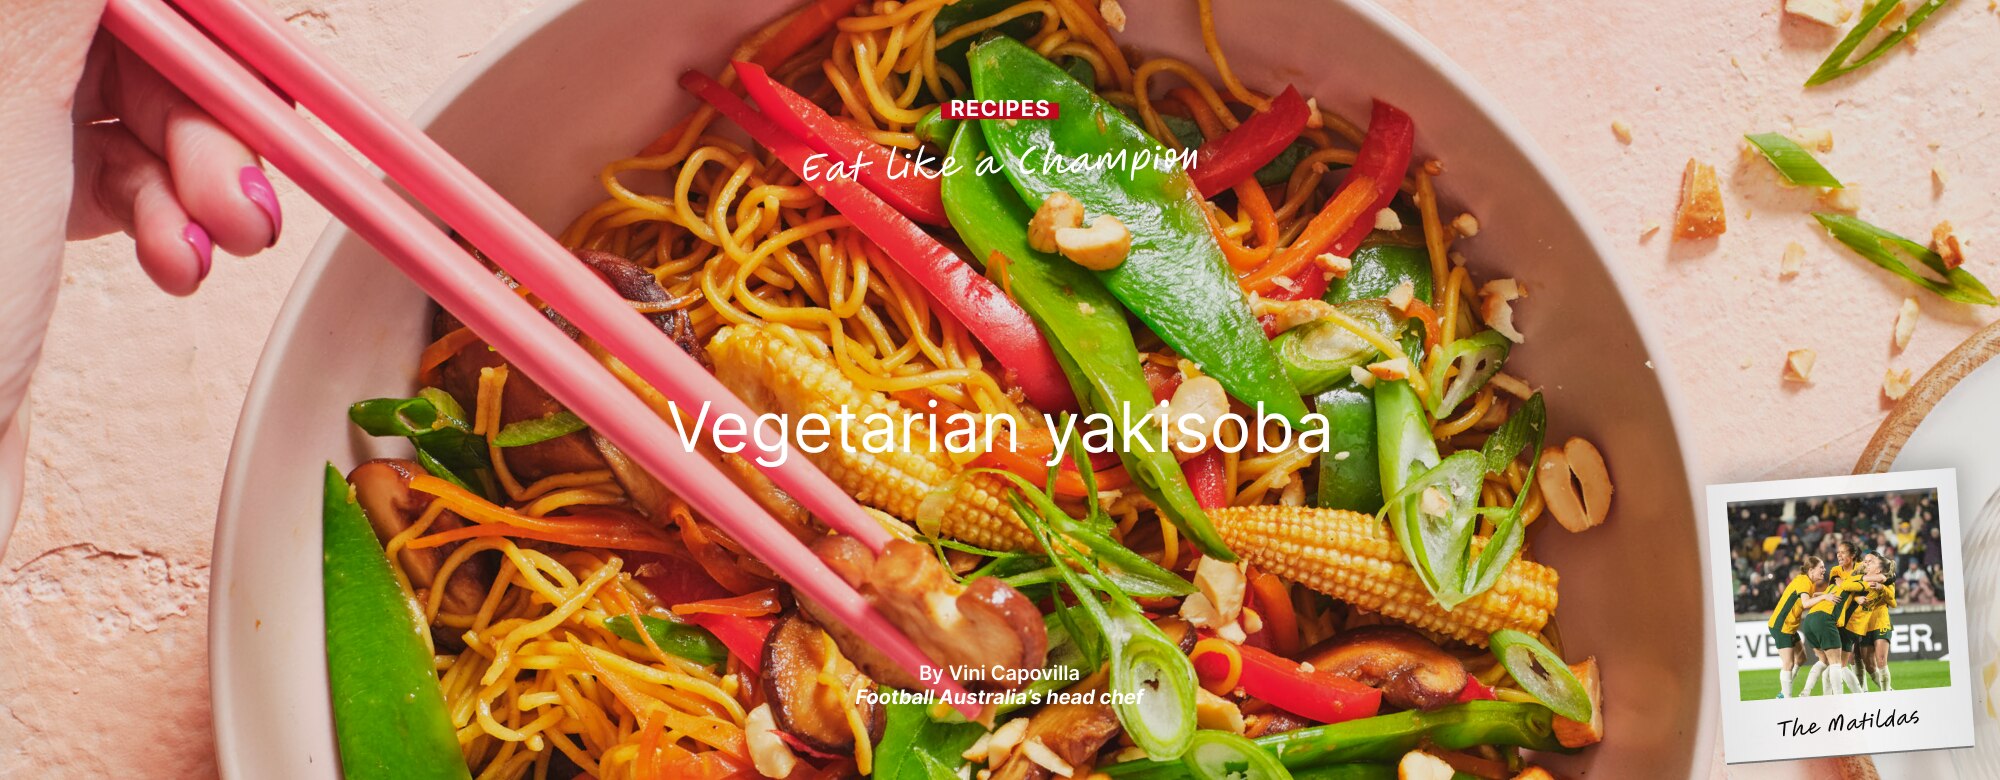 Vegetarian yakisoba